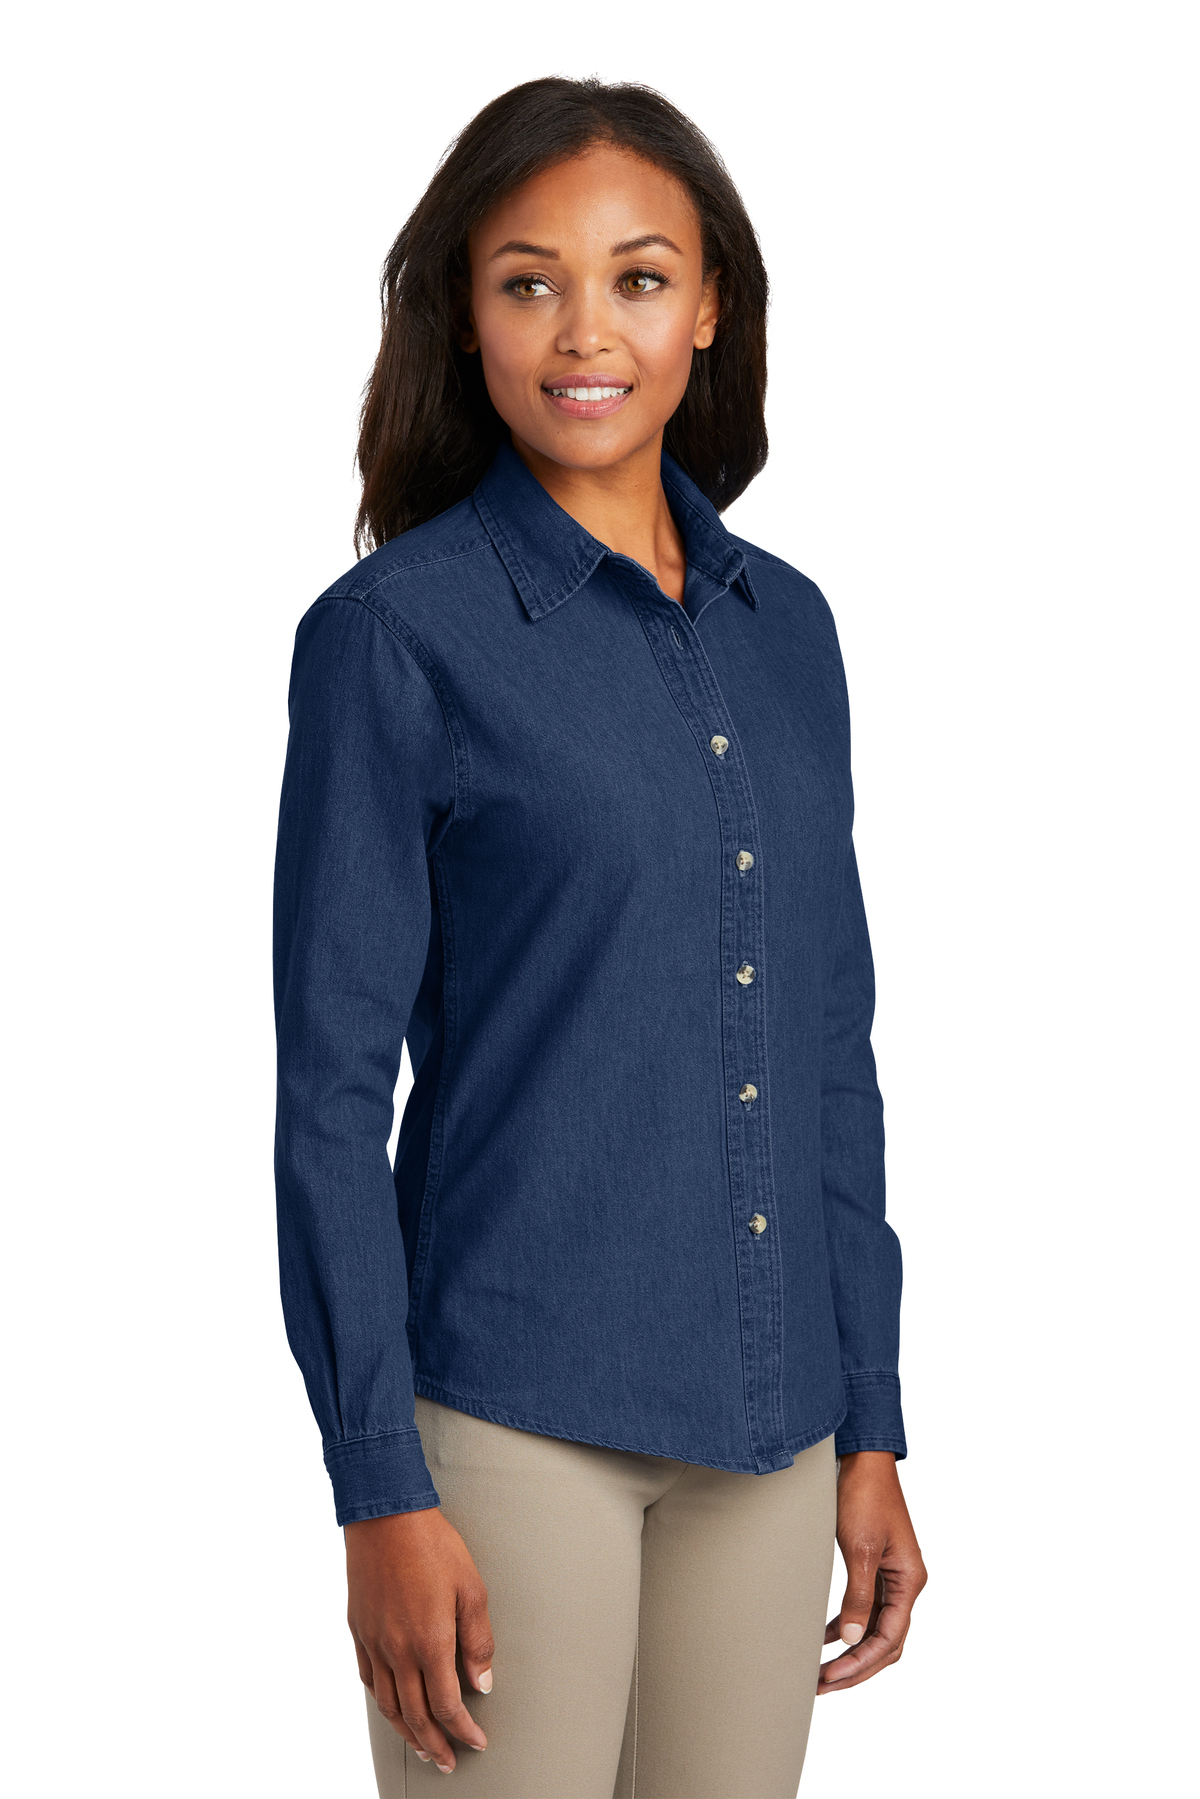 toca el piano heroína triunfante Port & Company - Ladies Long Sleeve Value Denim Shirt | Product | Port &  Company